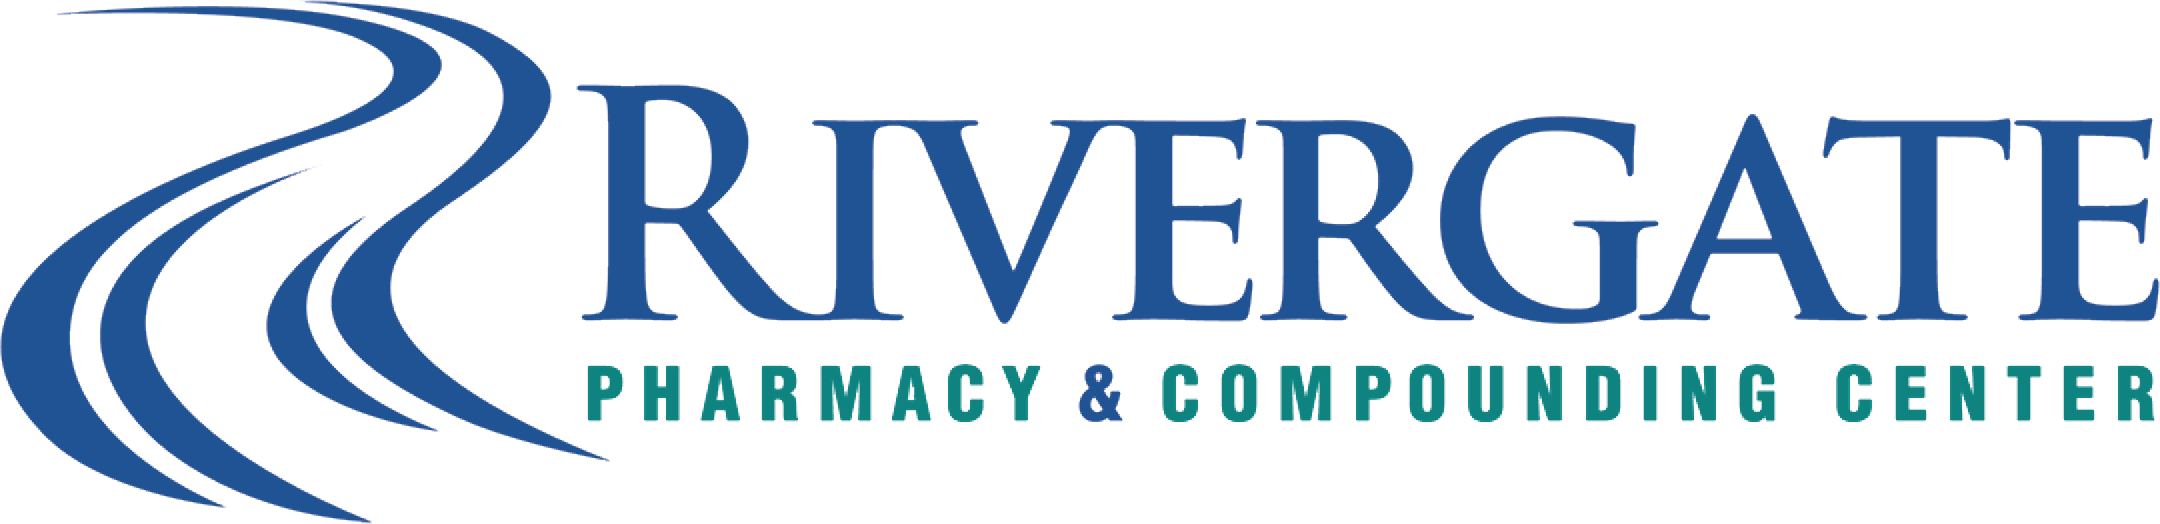 Rivergate Pharmacy & Compounding Center